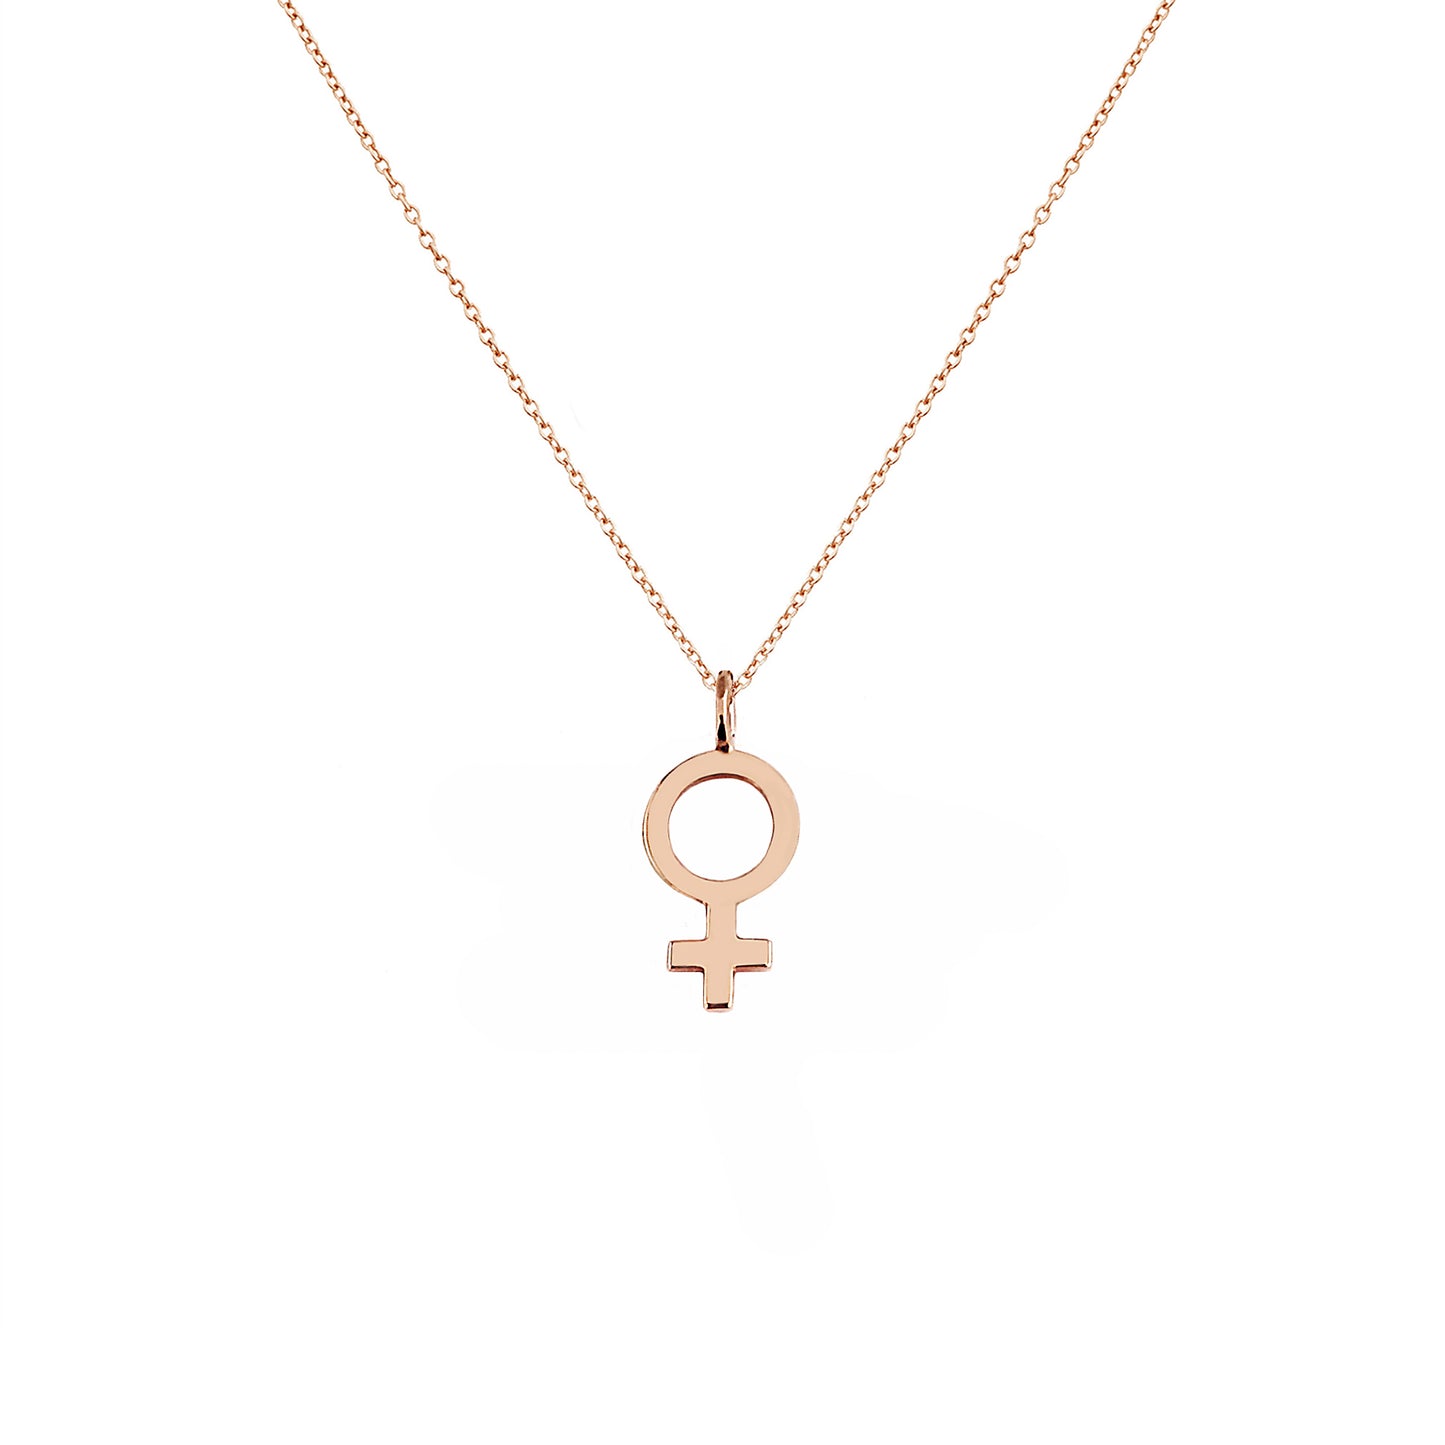 14K 9K Solid Gold Female Symbol Venus Pendant Necklace